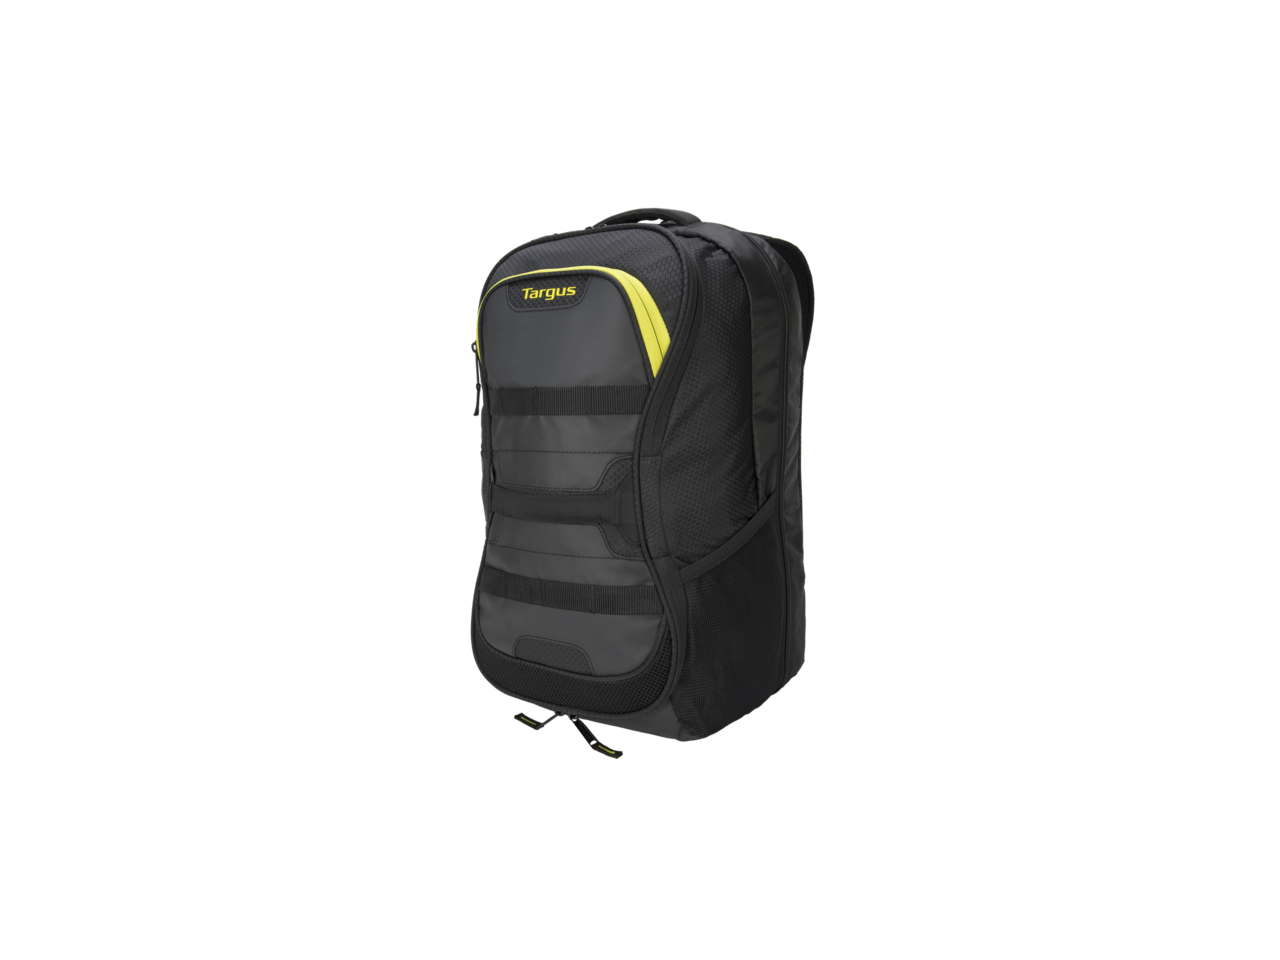 Targus 15.6" Targus Work + Play Fitness Backpack (Black/Yellow) - TSB944US